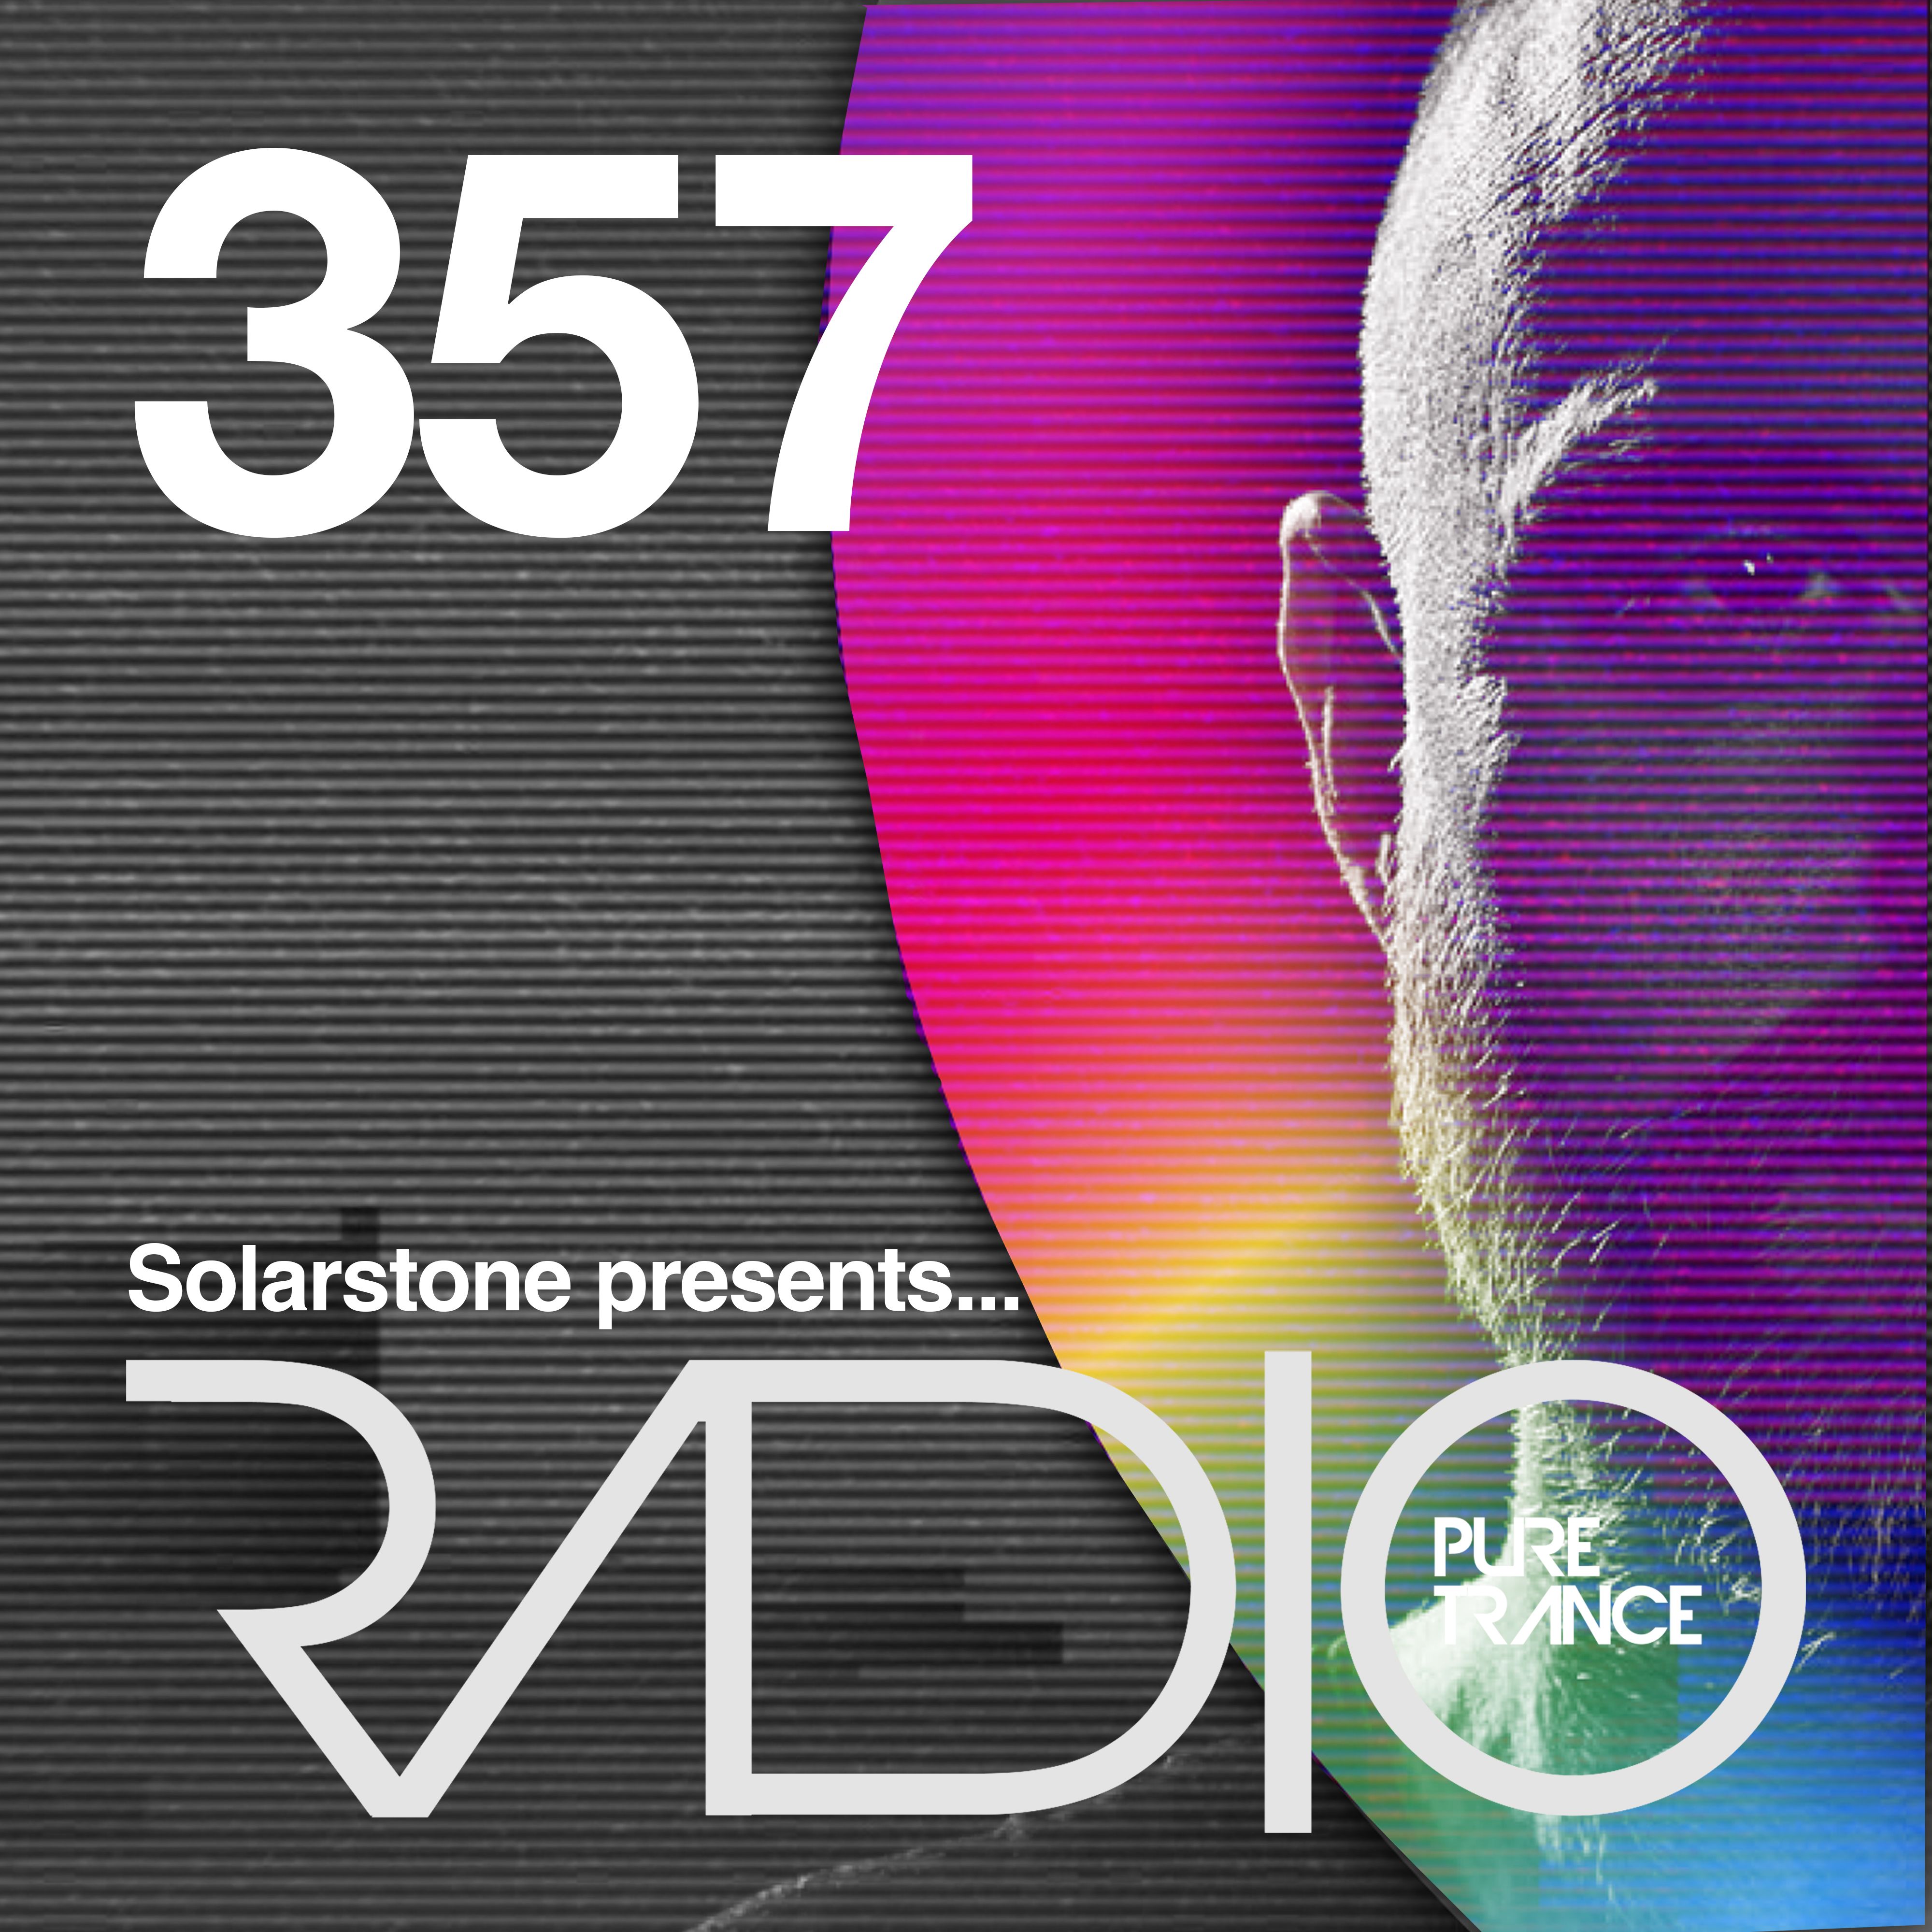 Solarstone Presents Pure Trance Radio Episode 357